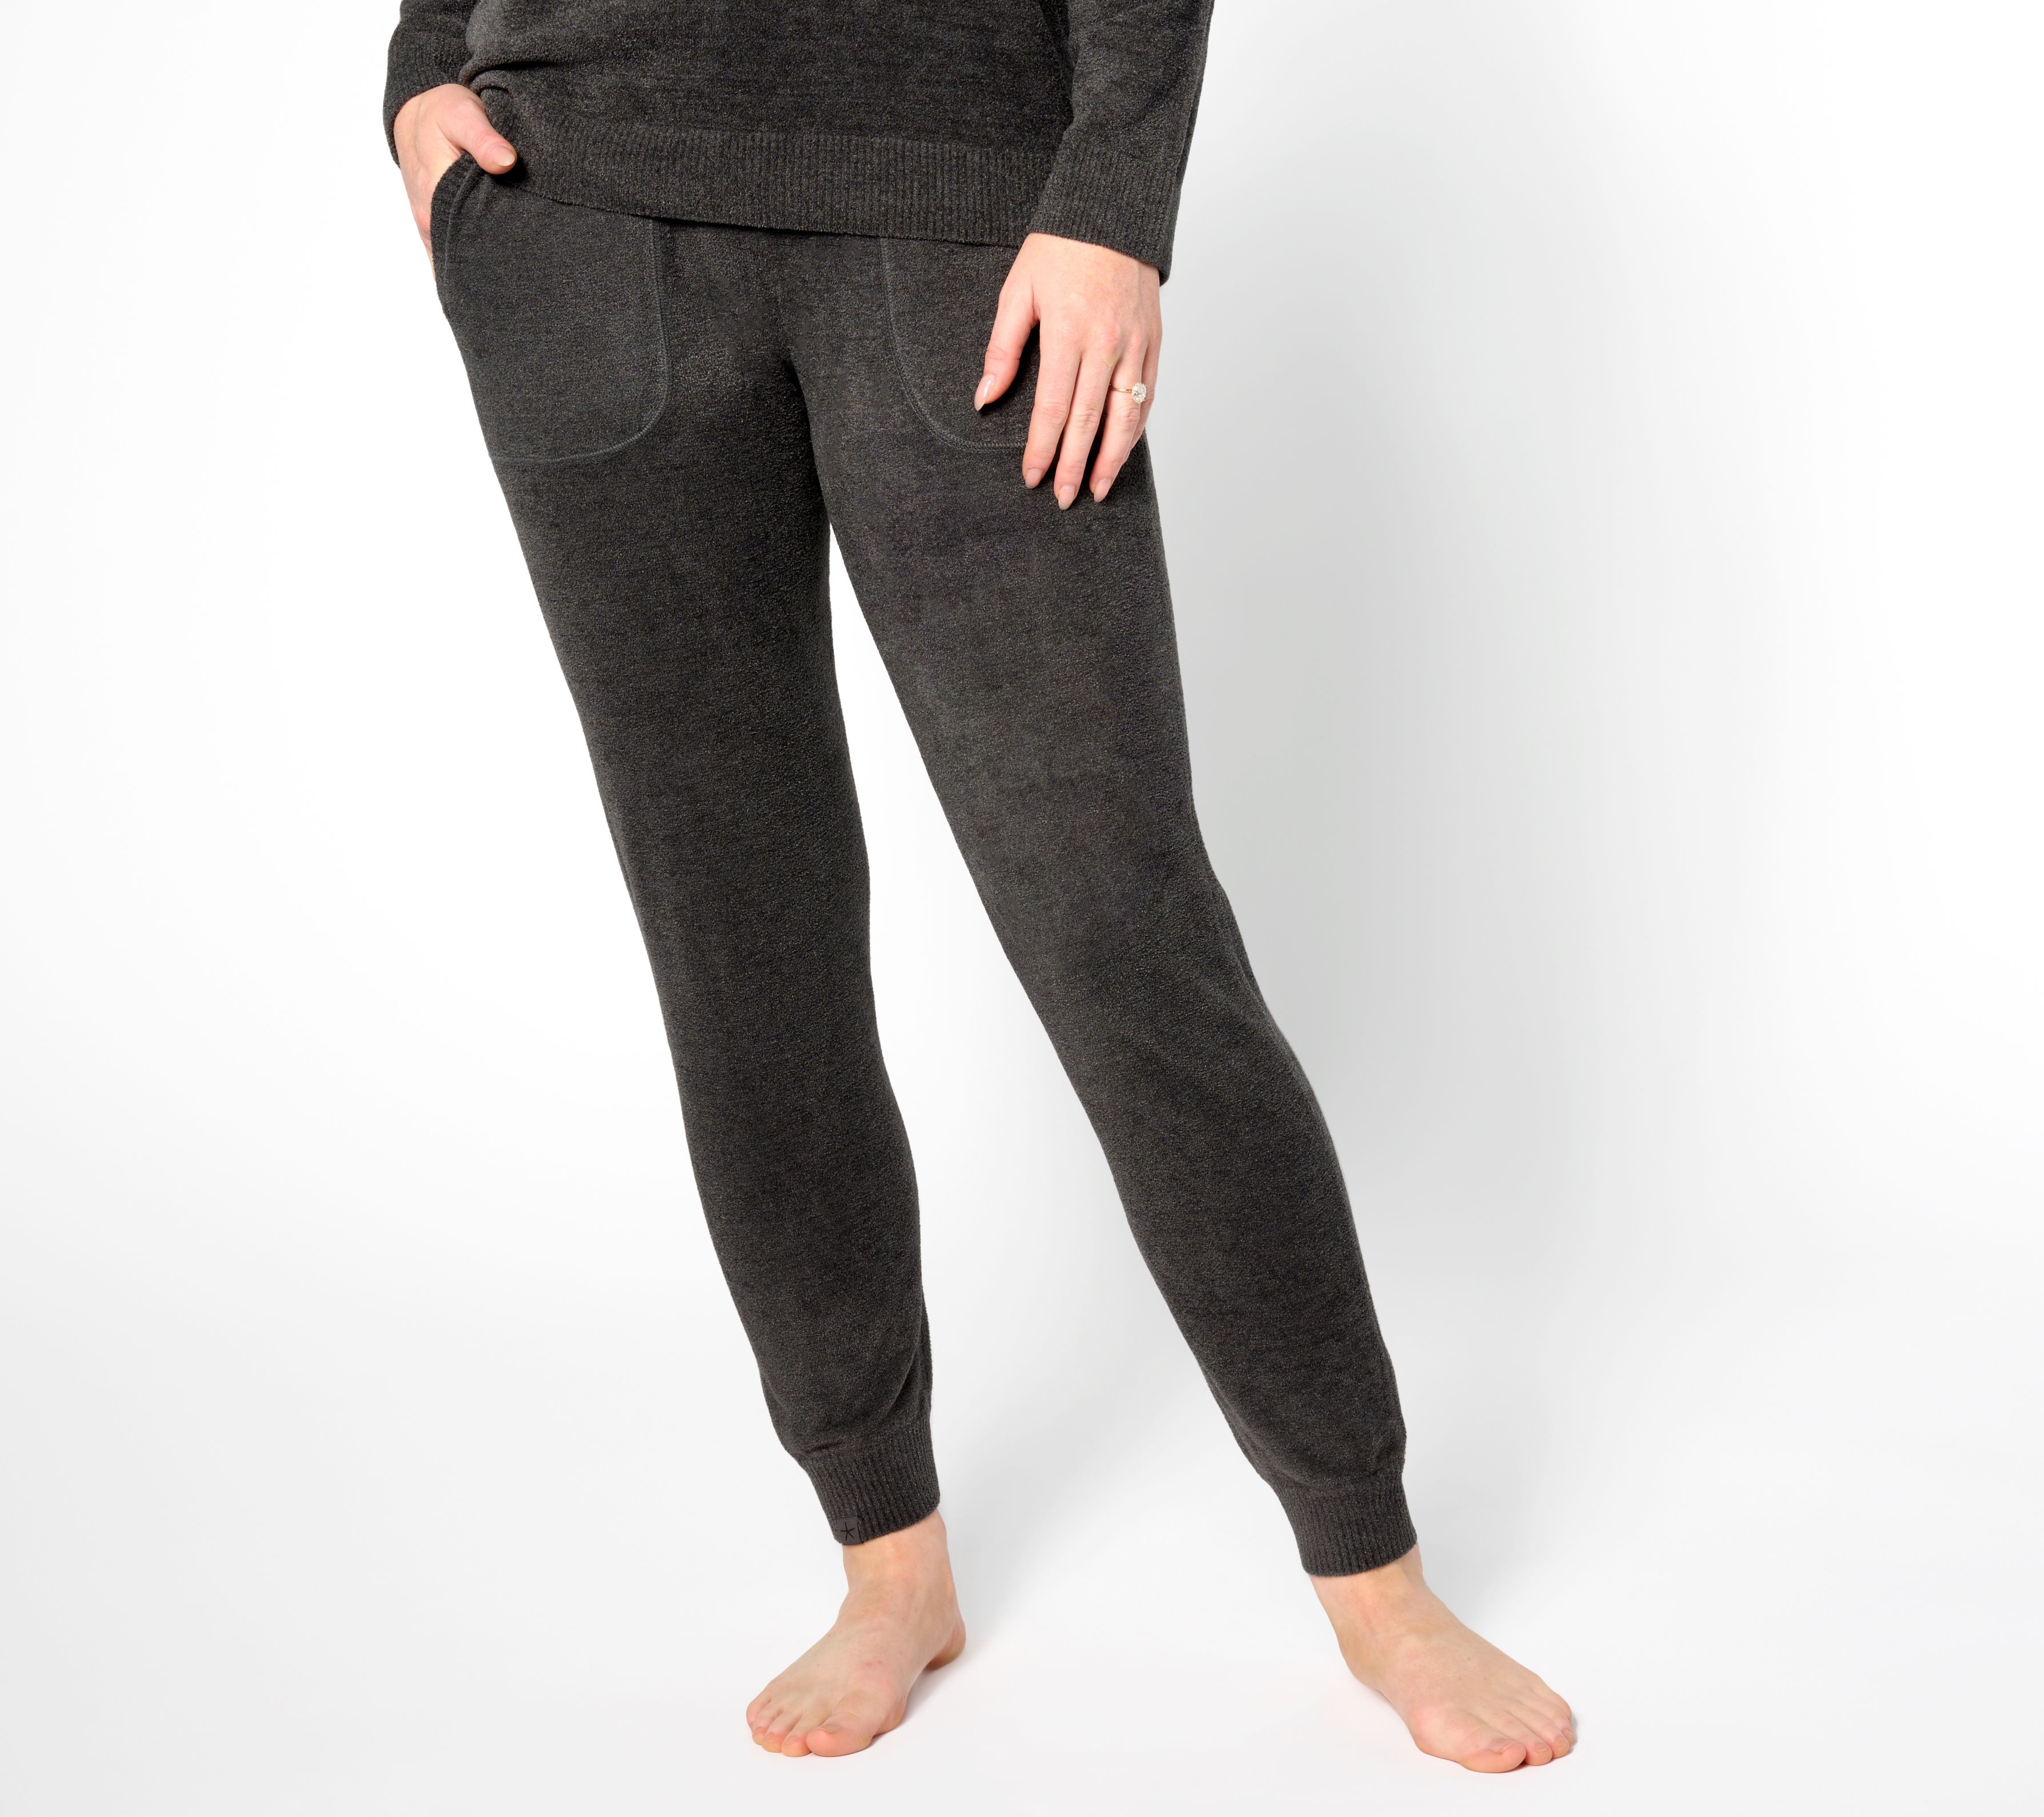 Inno Women's Sherpa Fleece Lined Jogger Pants Warm Sweatpants Thermal  Athletic Lounge, Navy Blue, S, Petite-28 Inseam